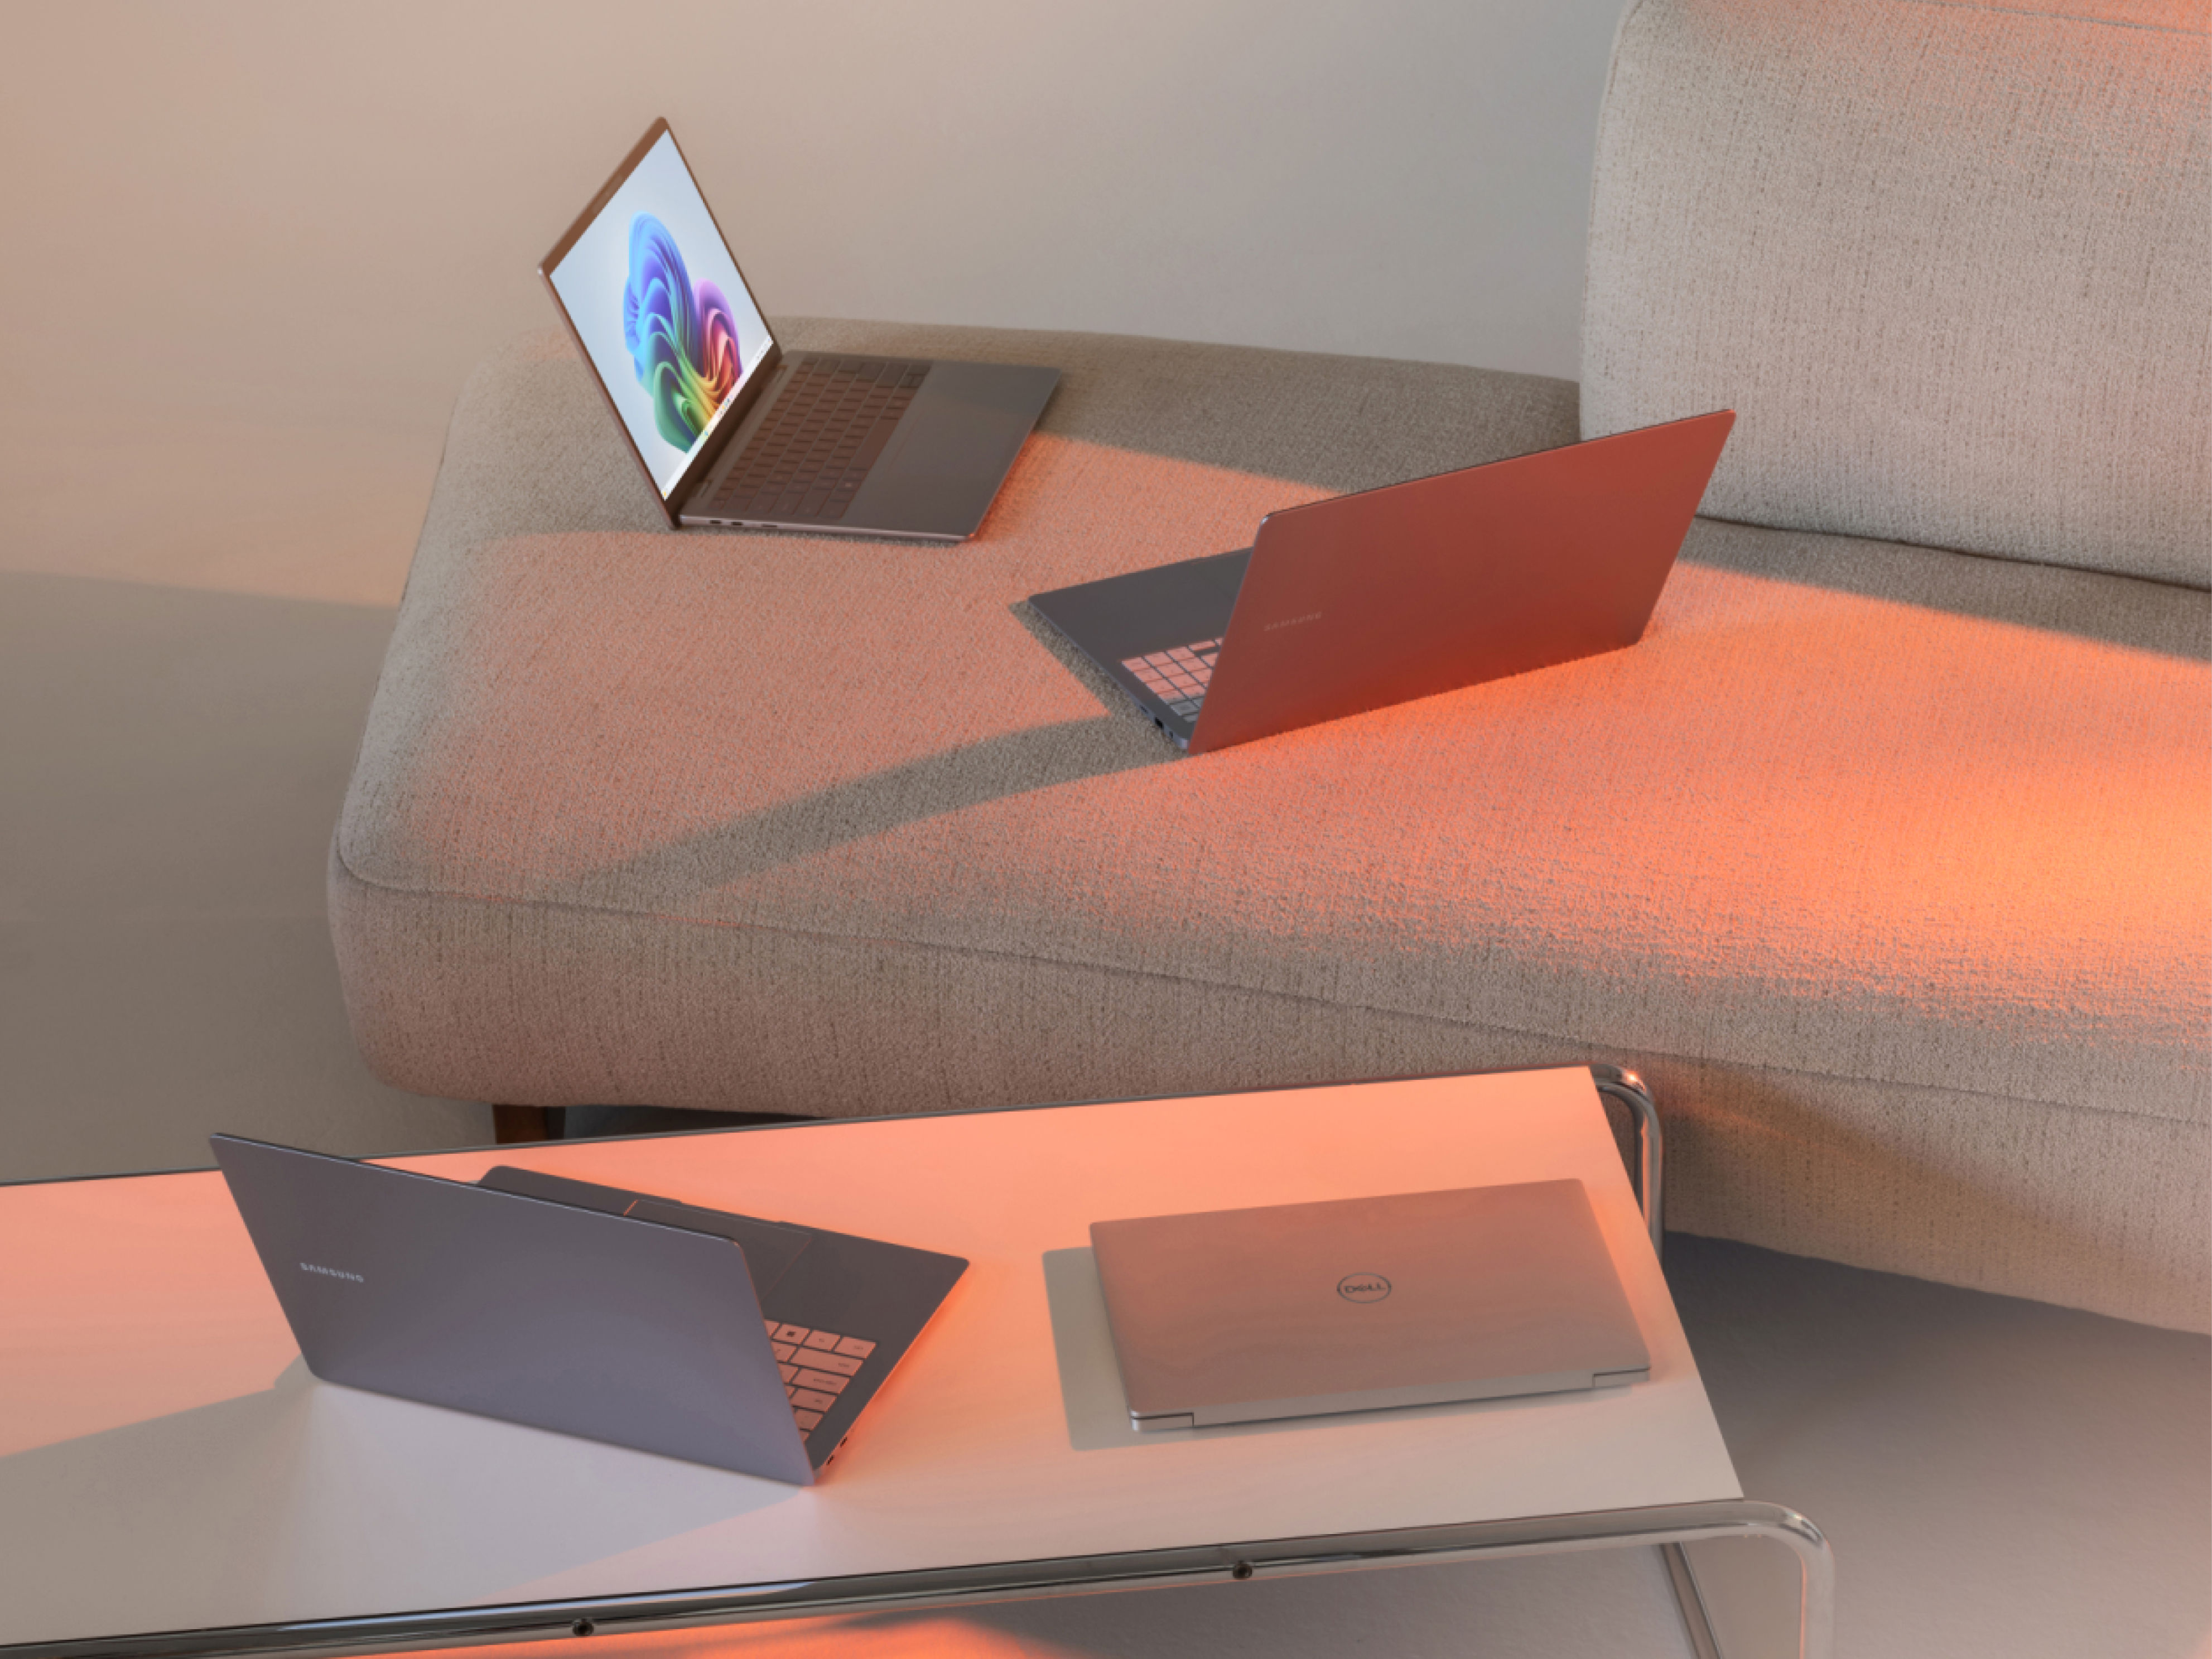 Flere laptops, der står på et kaffebord og en sofa